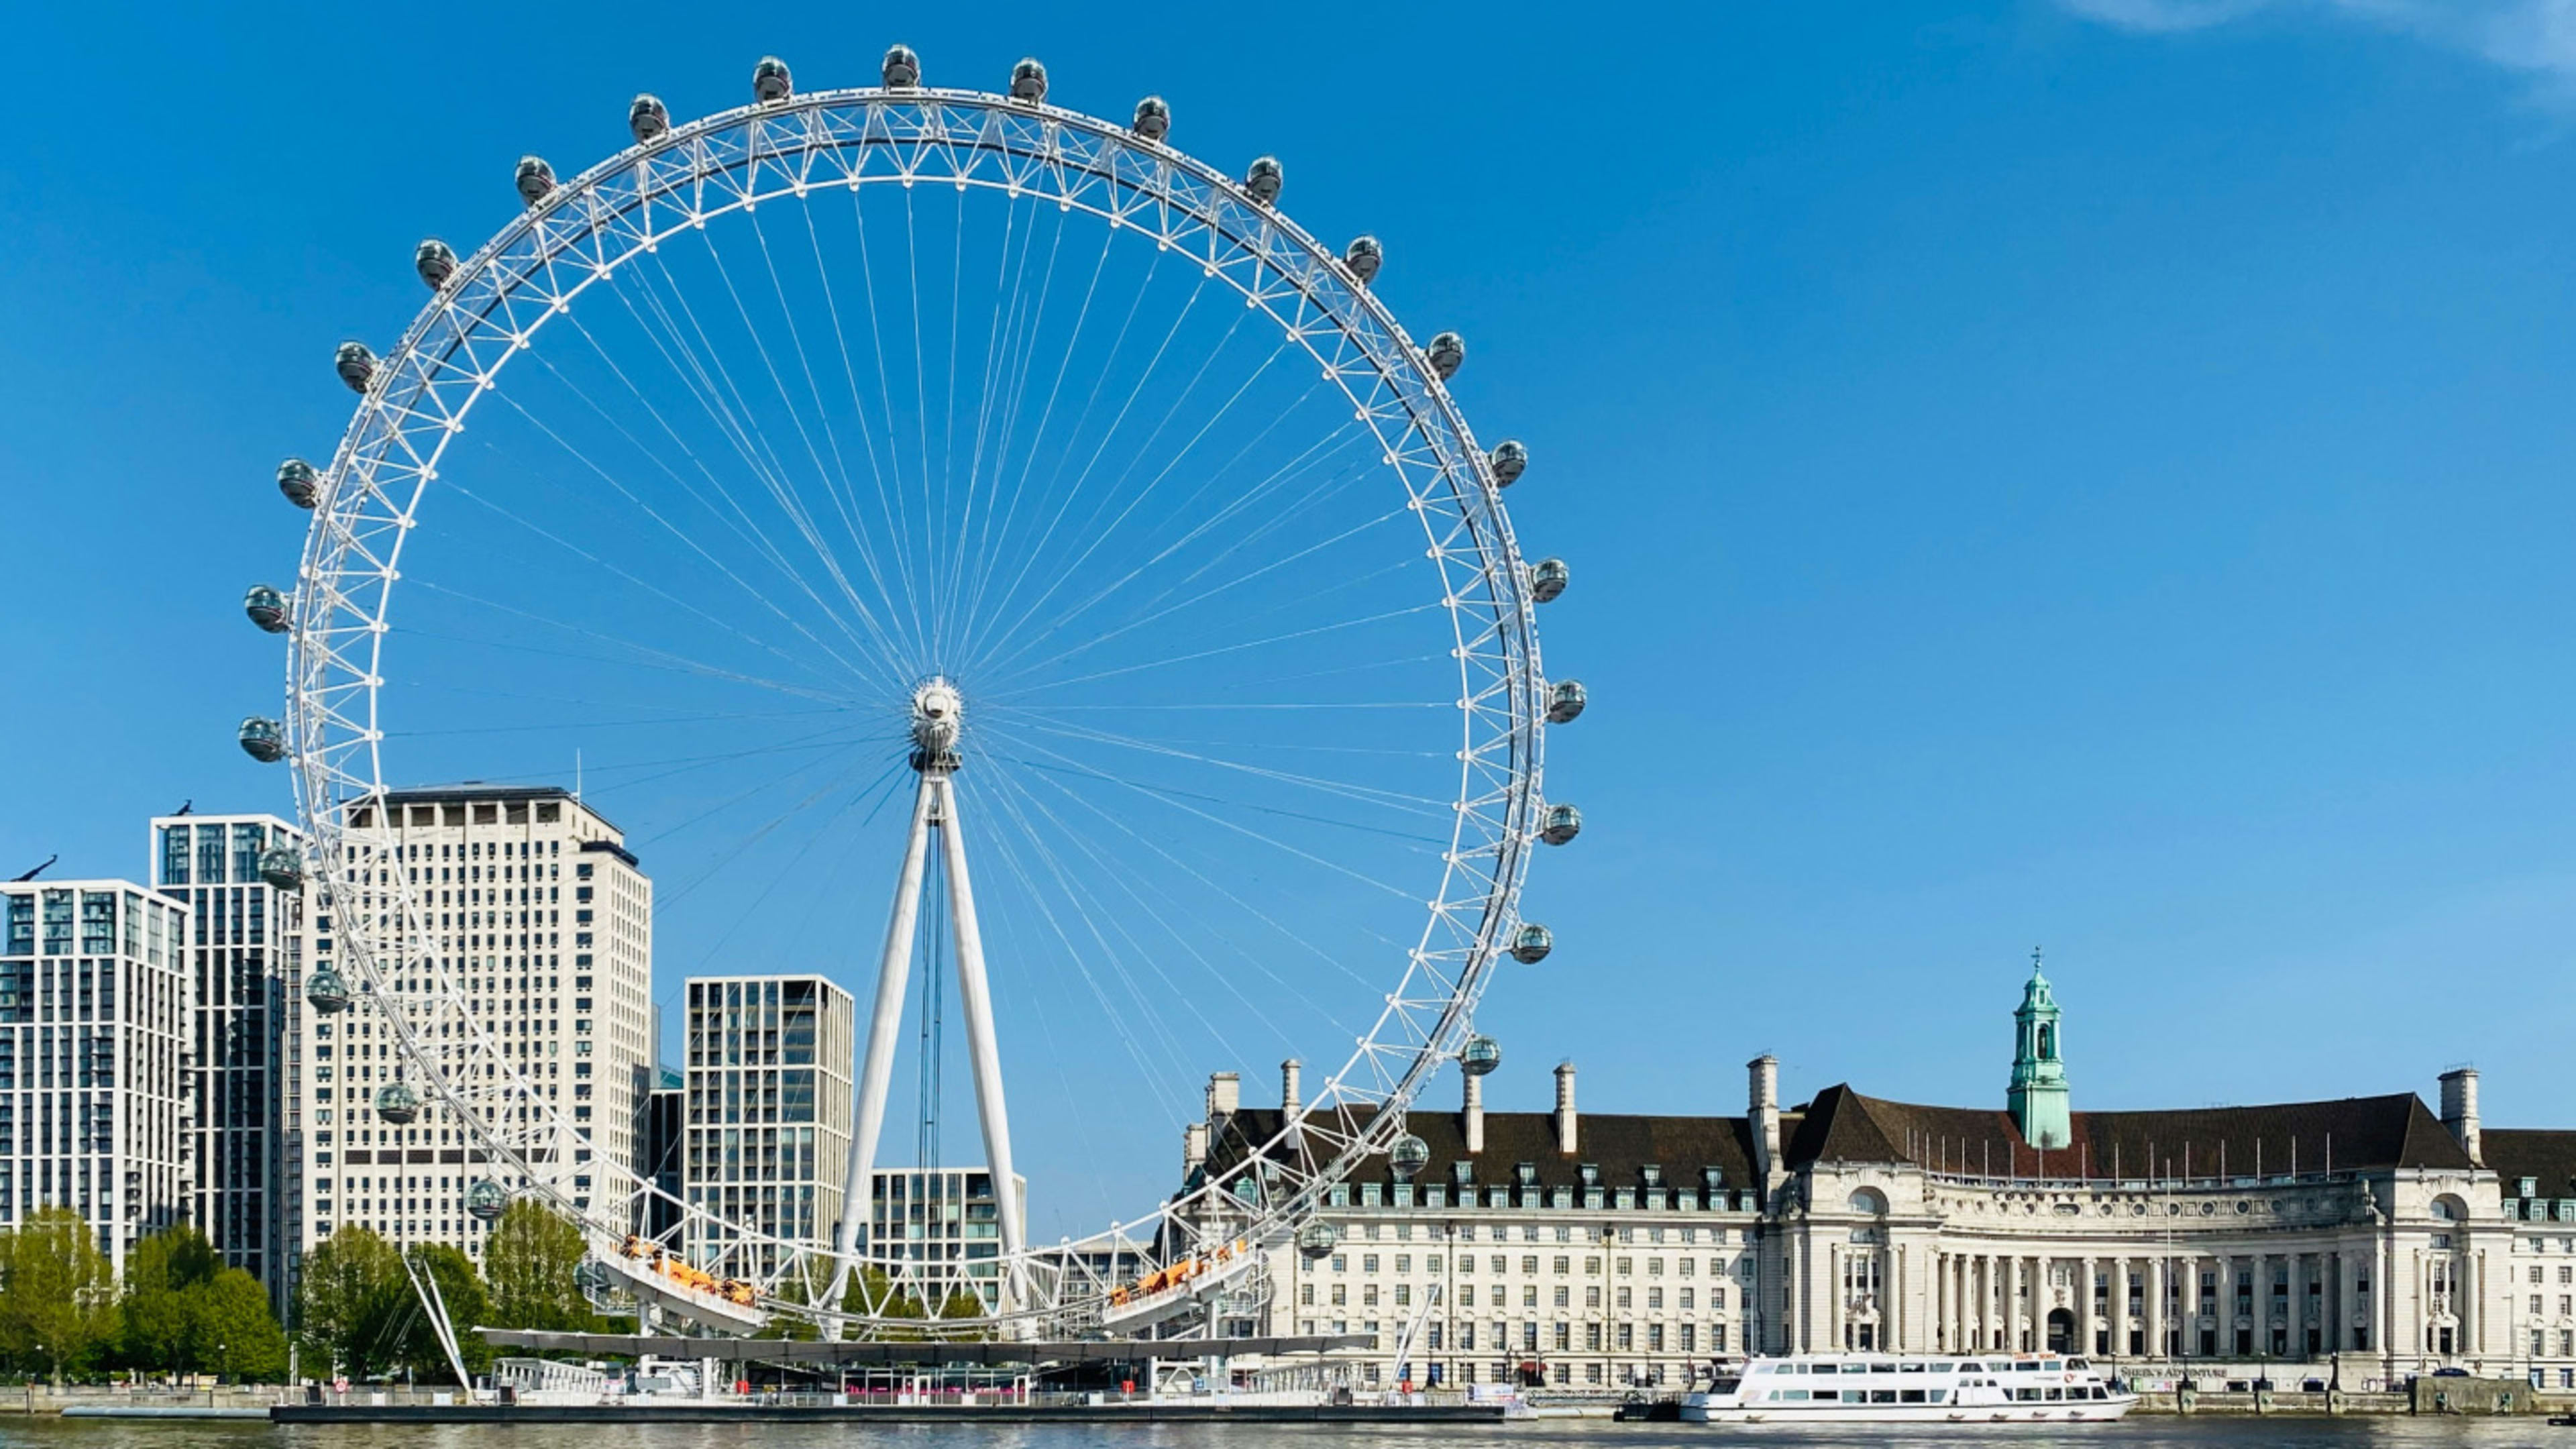 Image of the London Eye